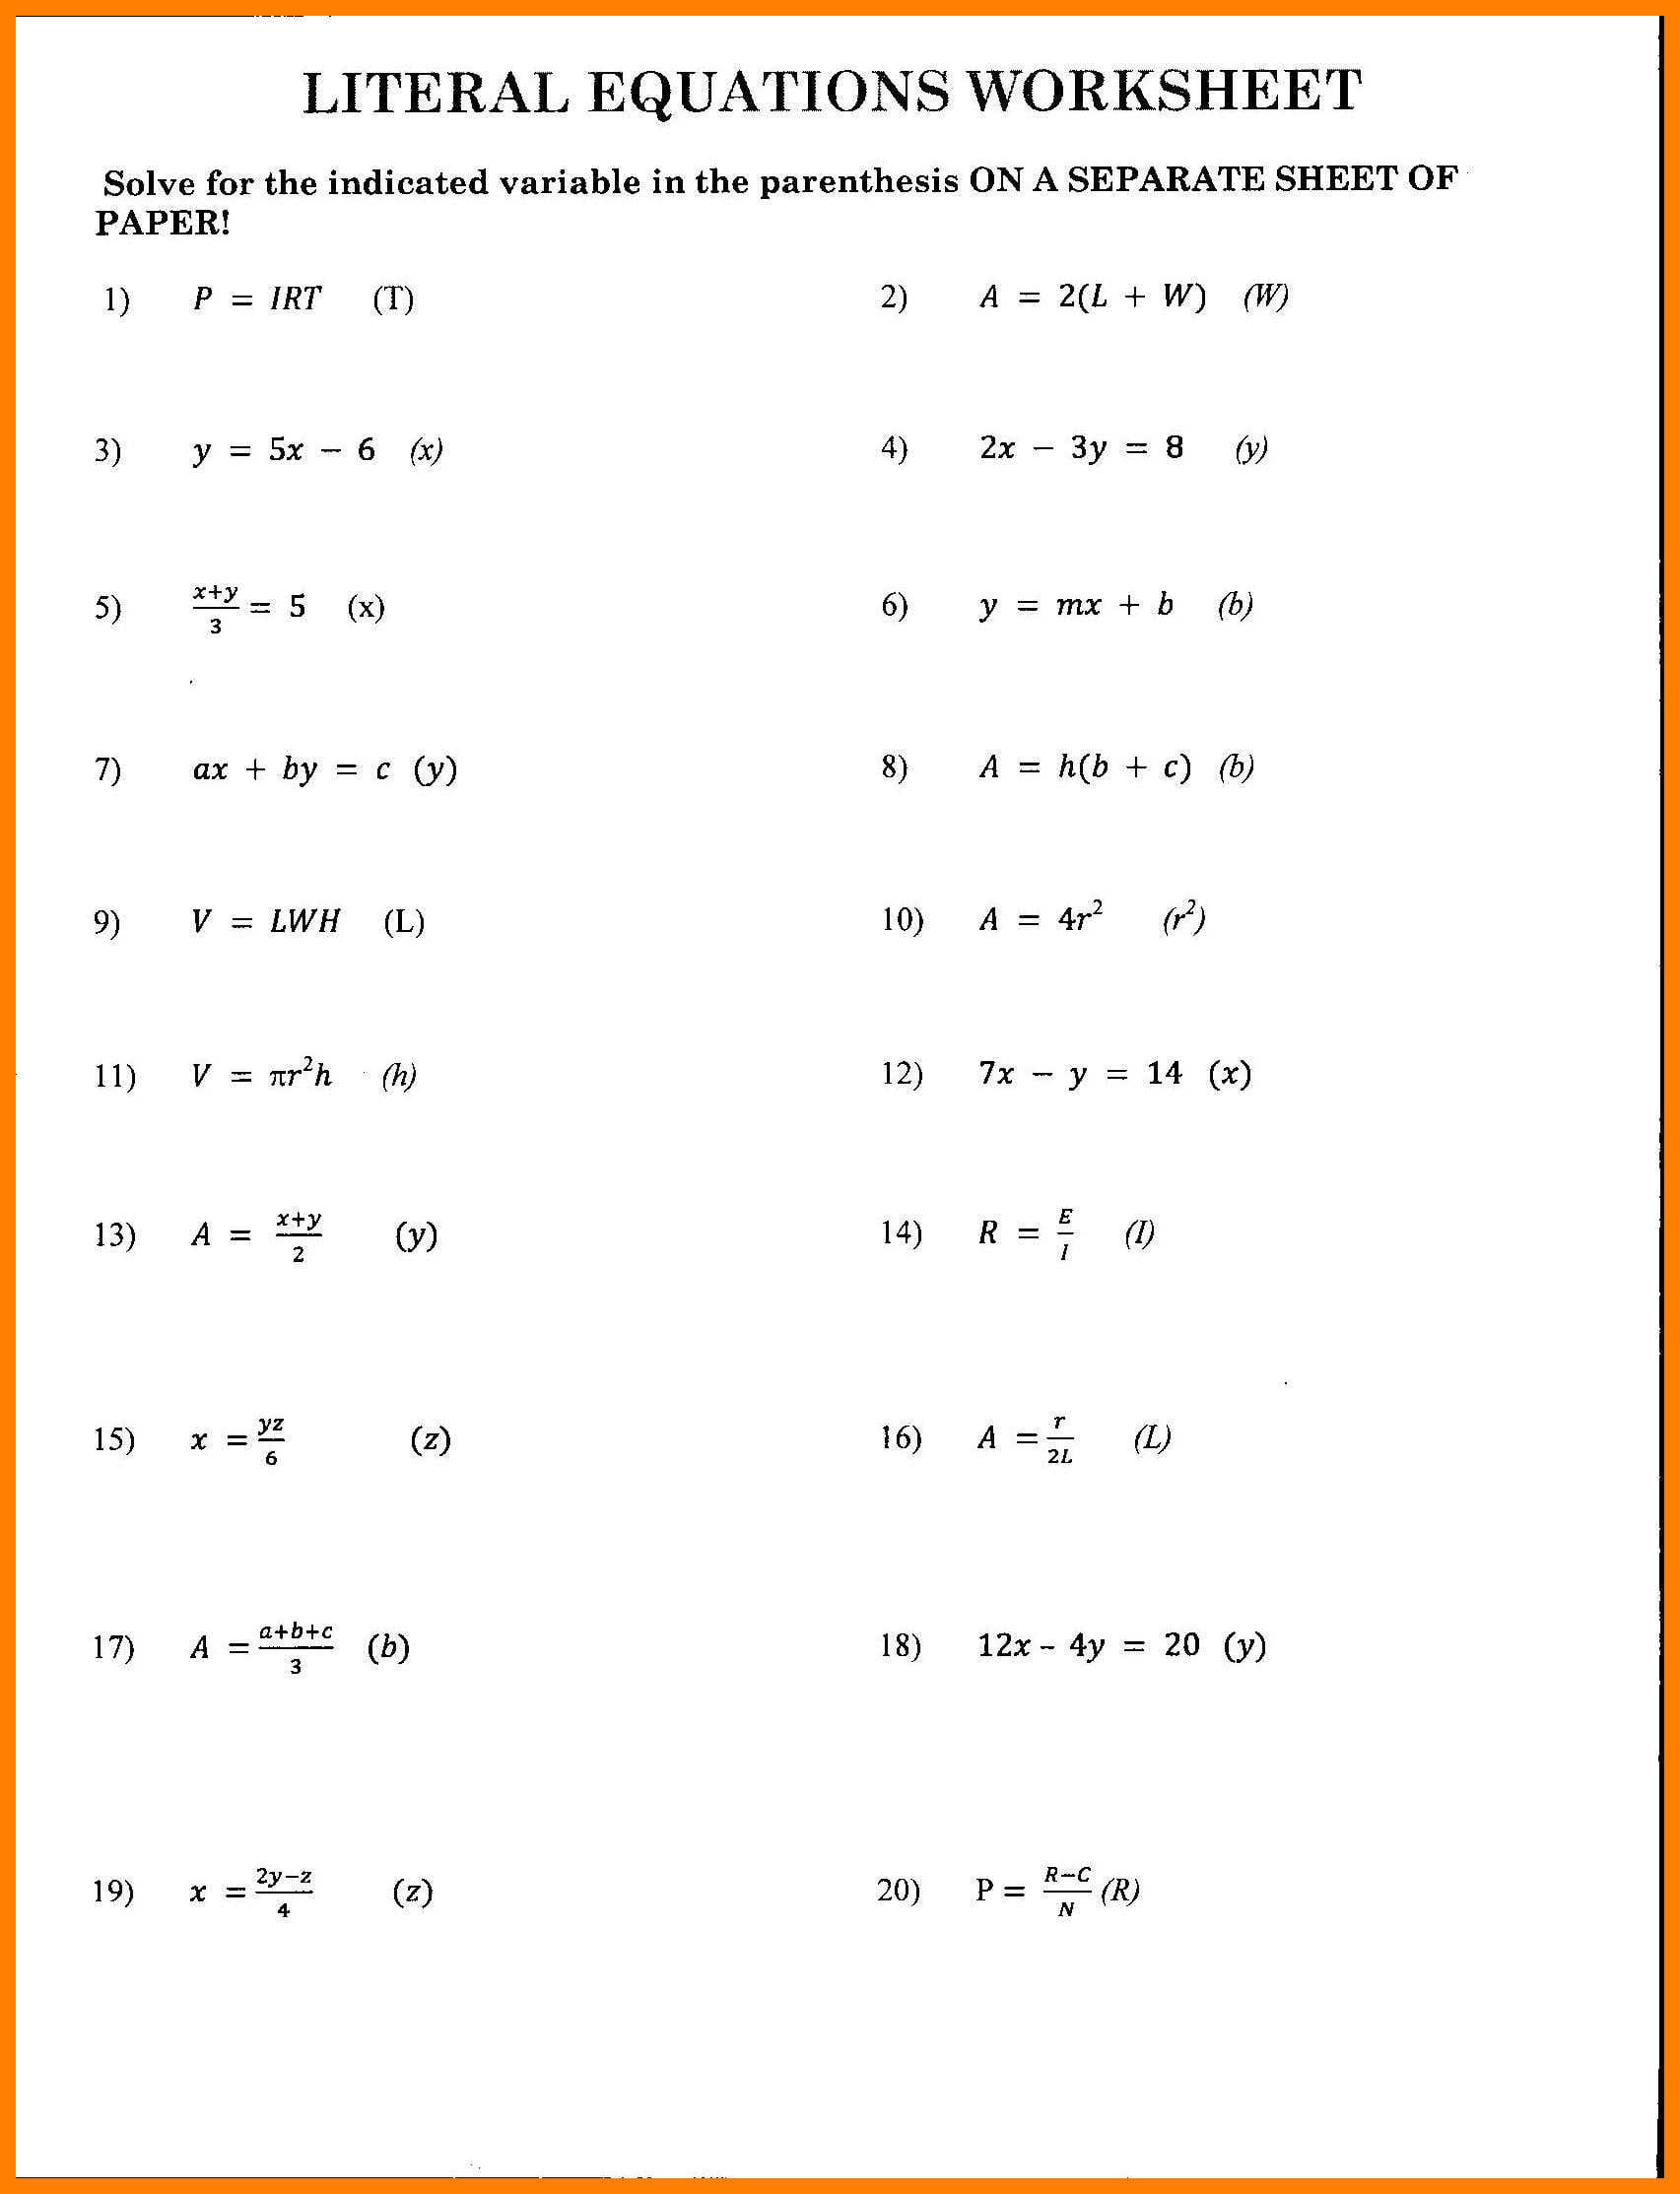 Basic Equation Worksheets For Literal Equations Worksheet Answers